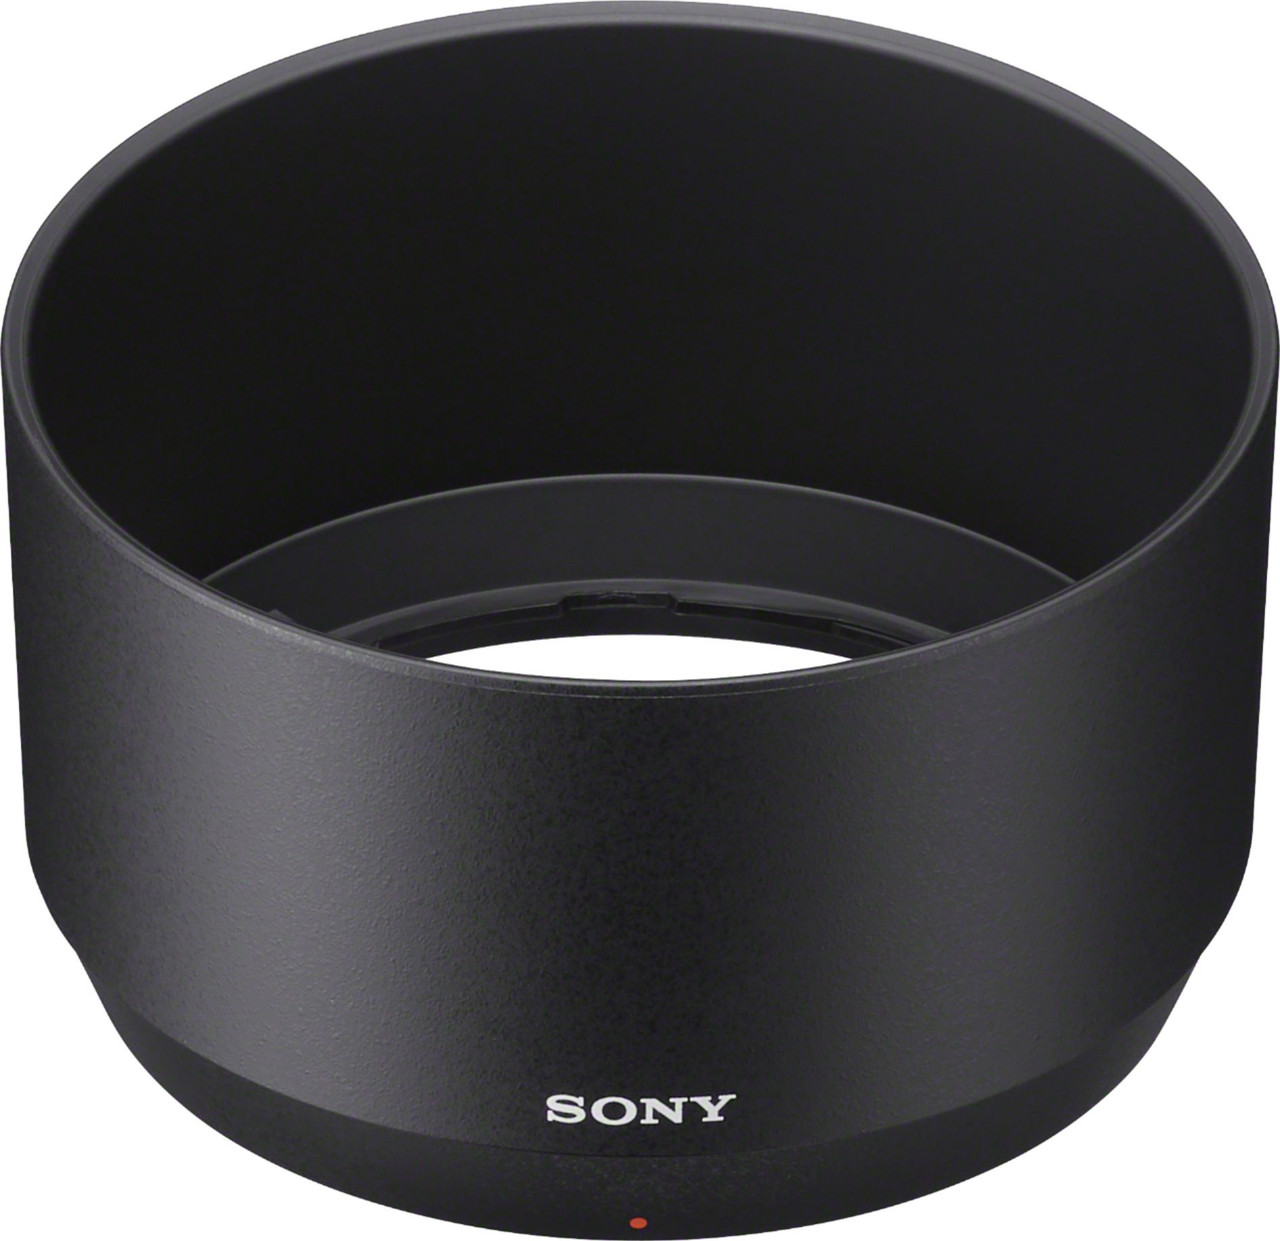 Sony - E 70-350mm F4.5-6.3 G OSS Telephoto Zoom Lens for Sony E-mount Cameras